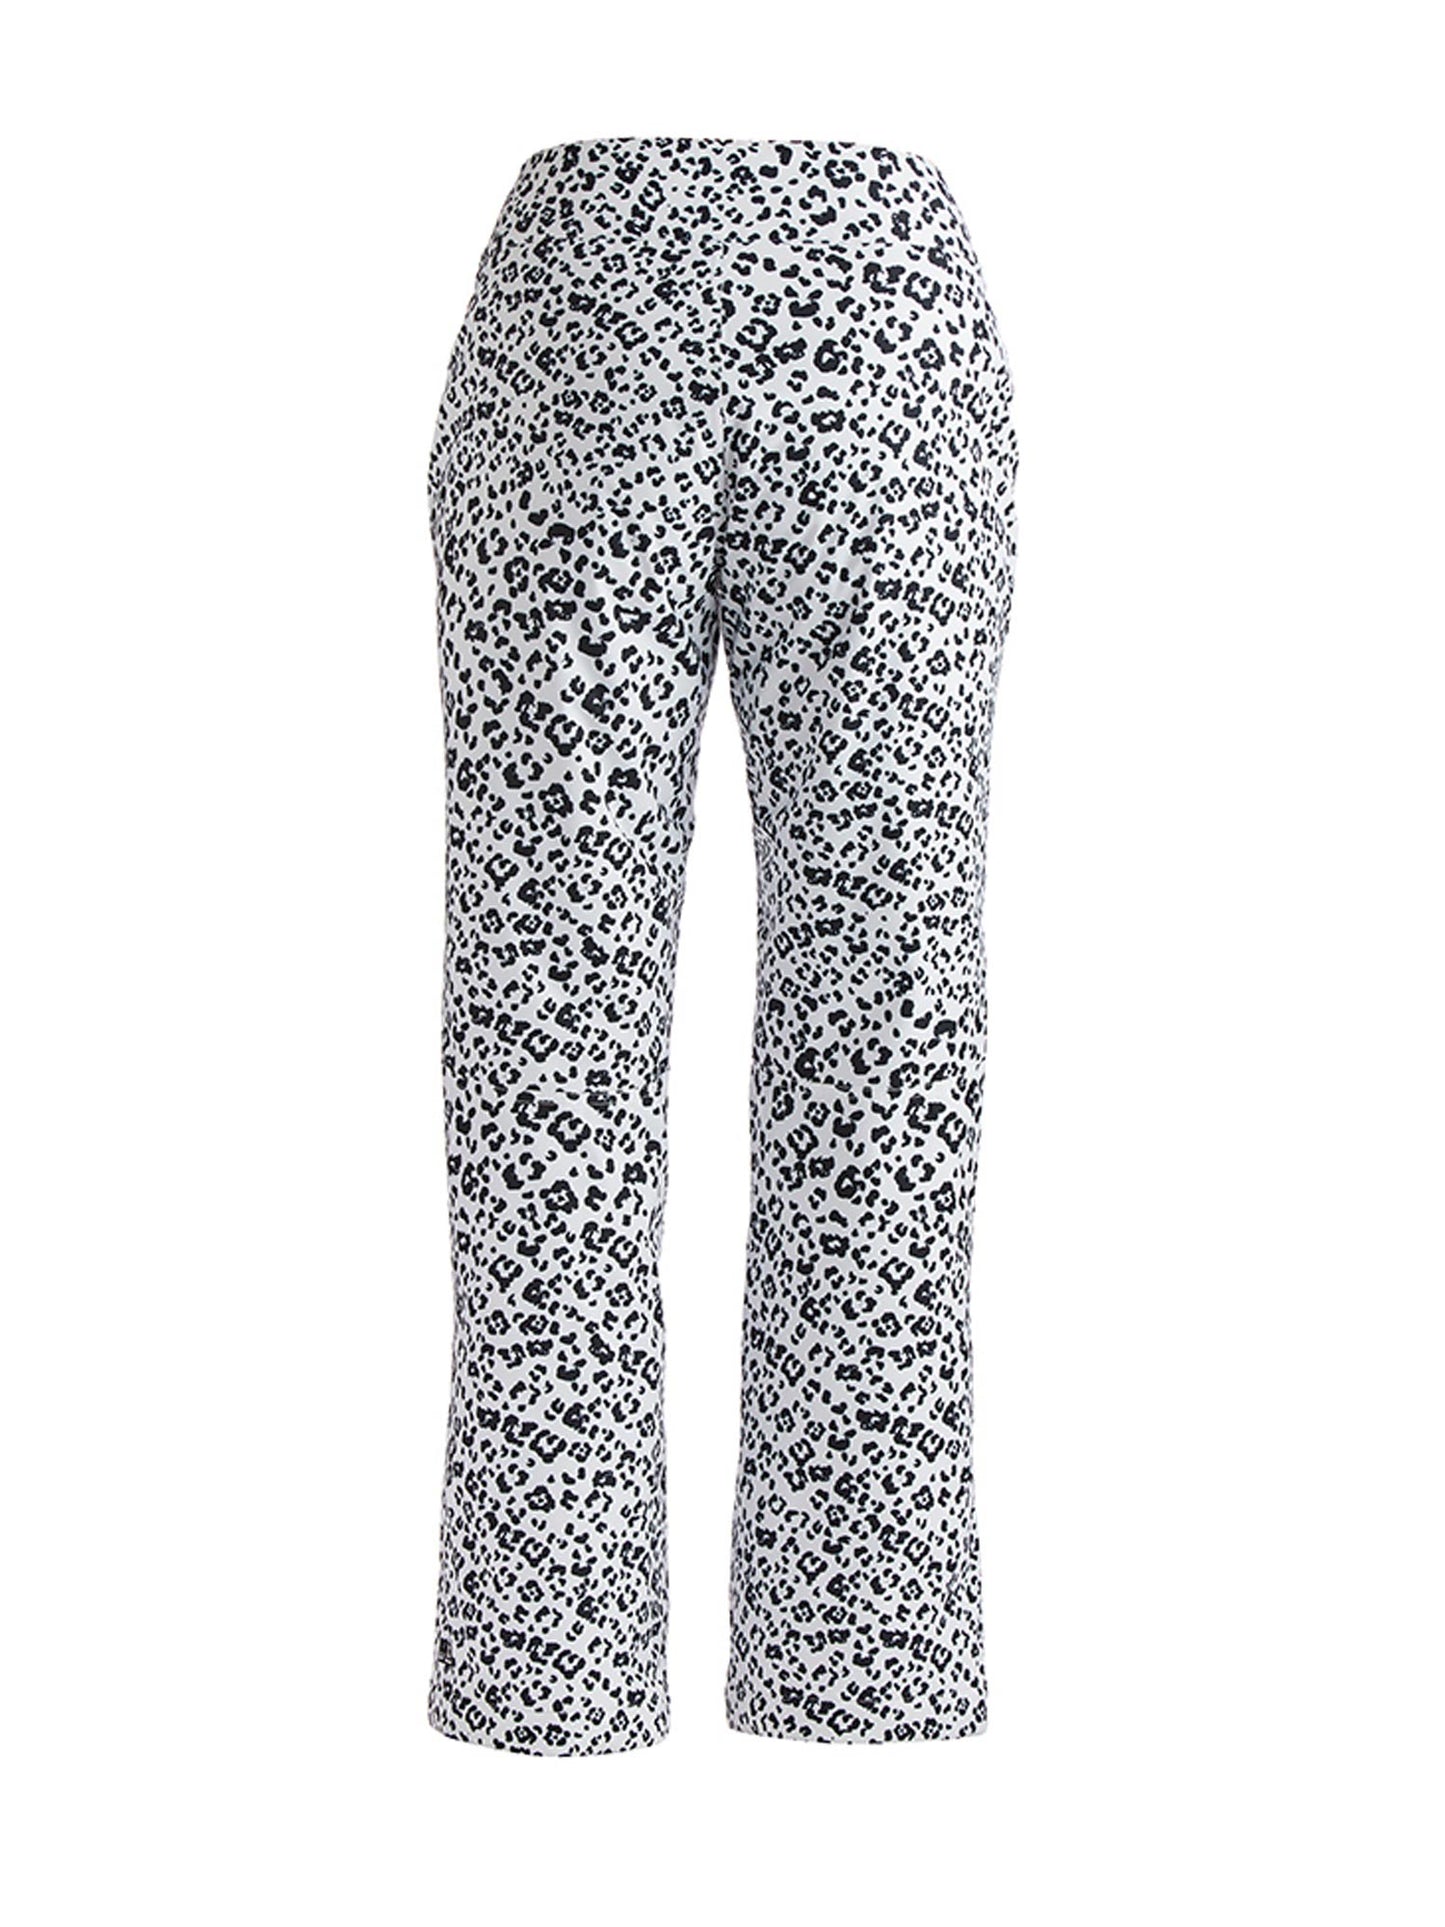 women's Nils Hannah ski pants,  white & black cheetah print